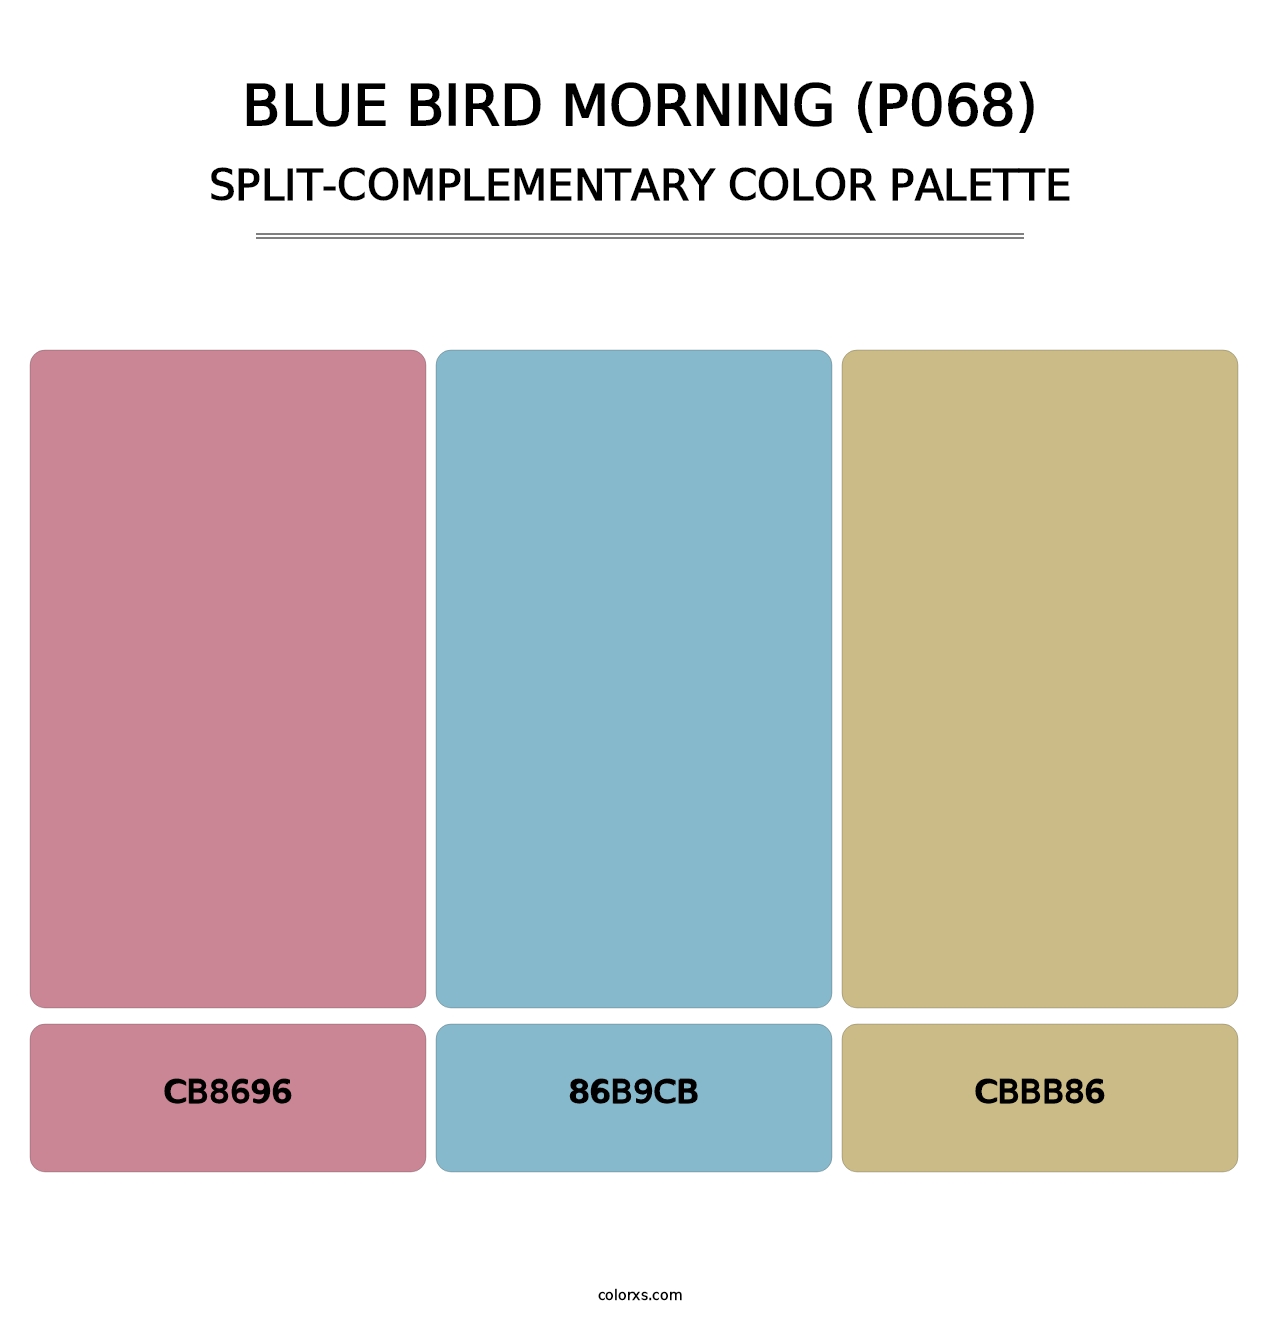 Blue Bird Morning (P068) - Split-Complementary Color Palette